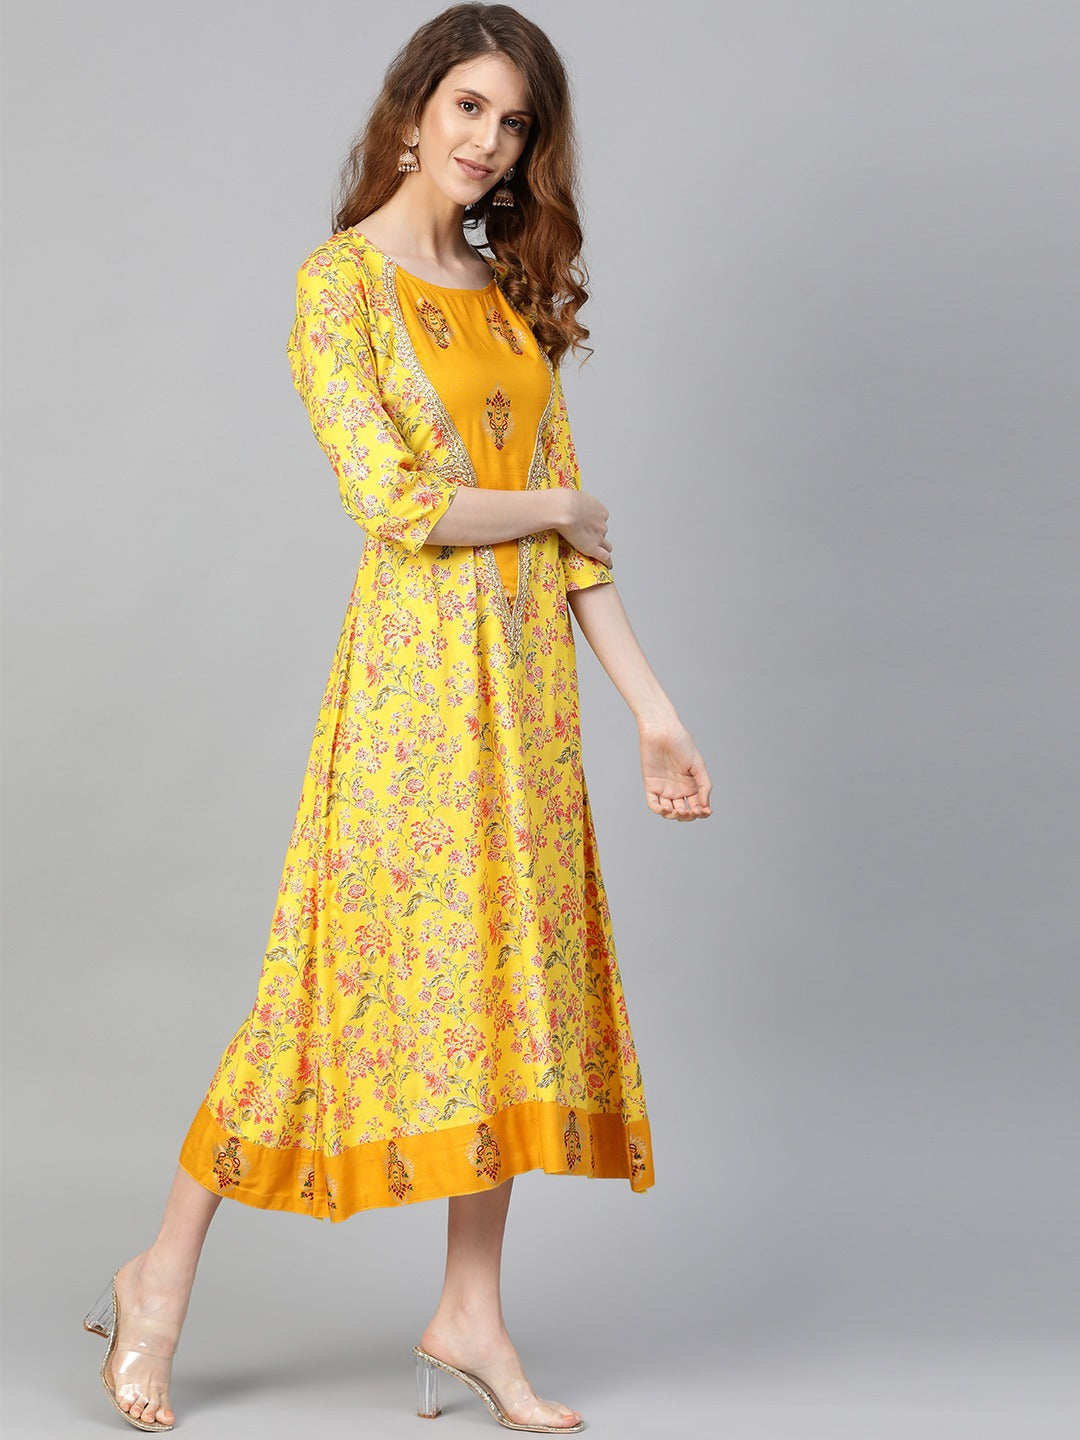 Myshka Women's Yellow Printed 3/4 Sleeve Cotton Slub Round Neck Casual Dress